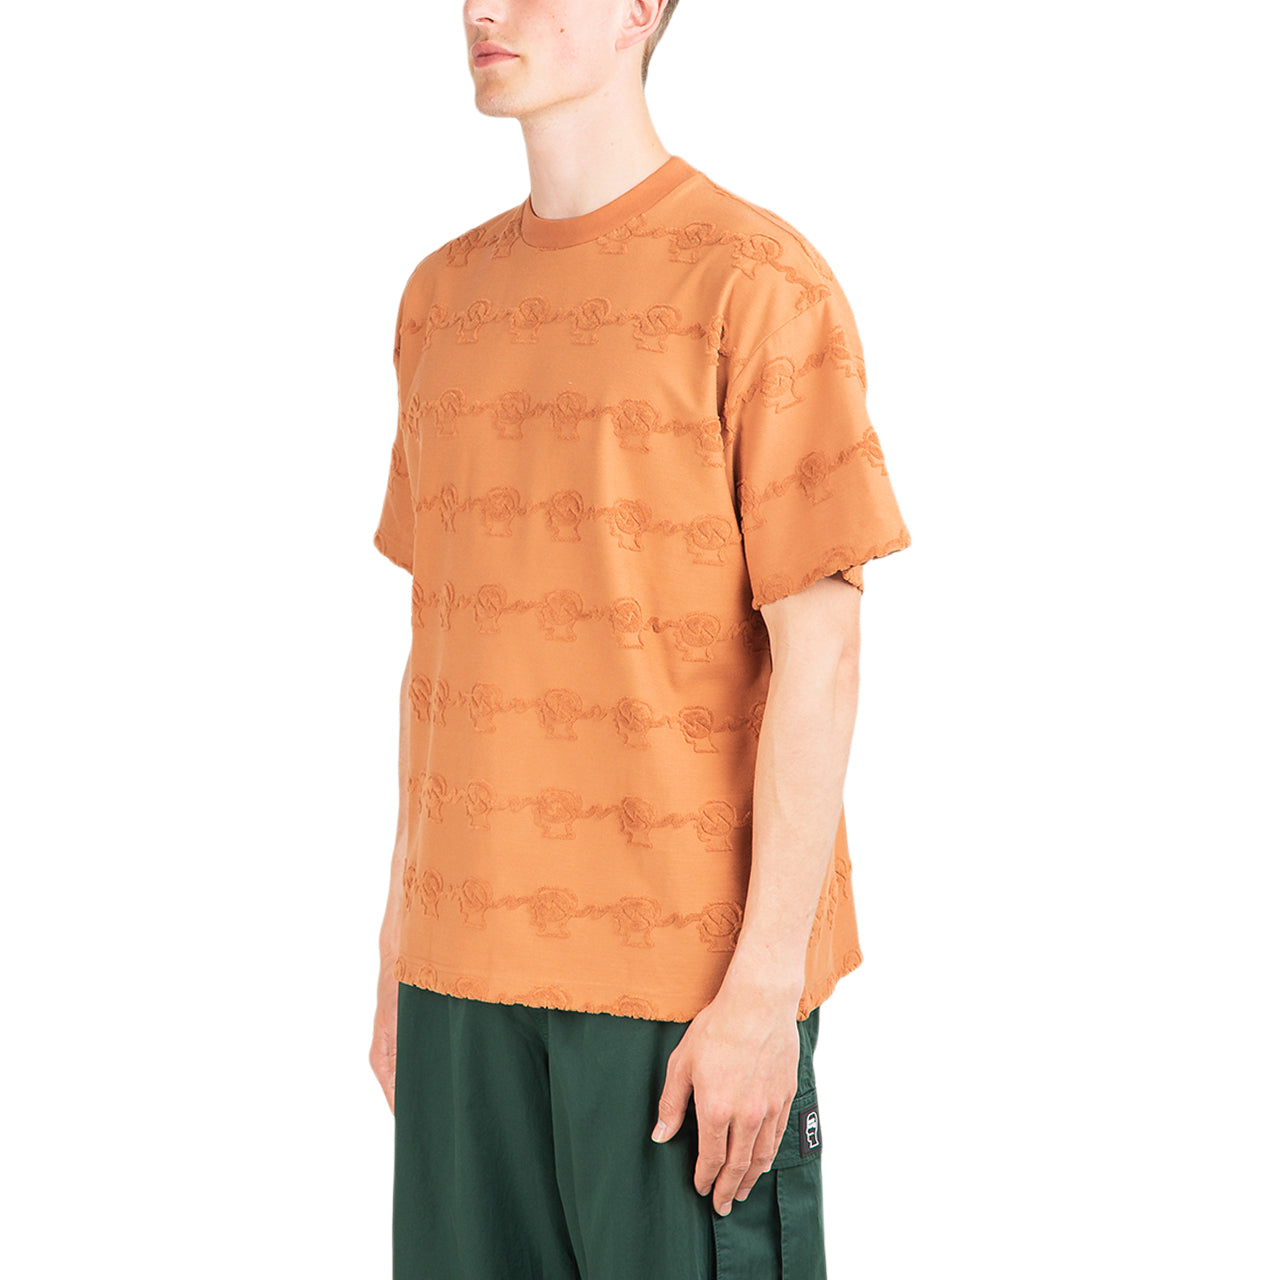 Brain Dead Running monolith T-Shirt (Orange)  - Cheap Juzsports Jordan Outlet